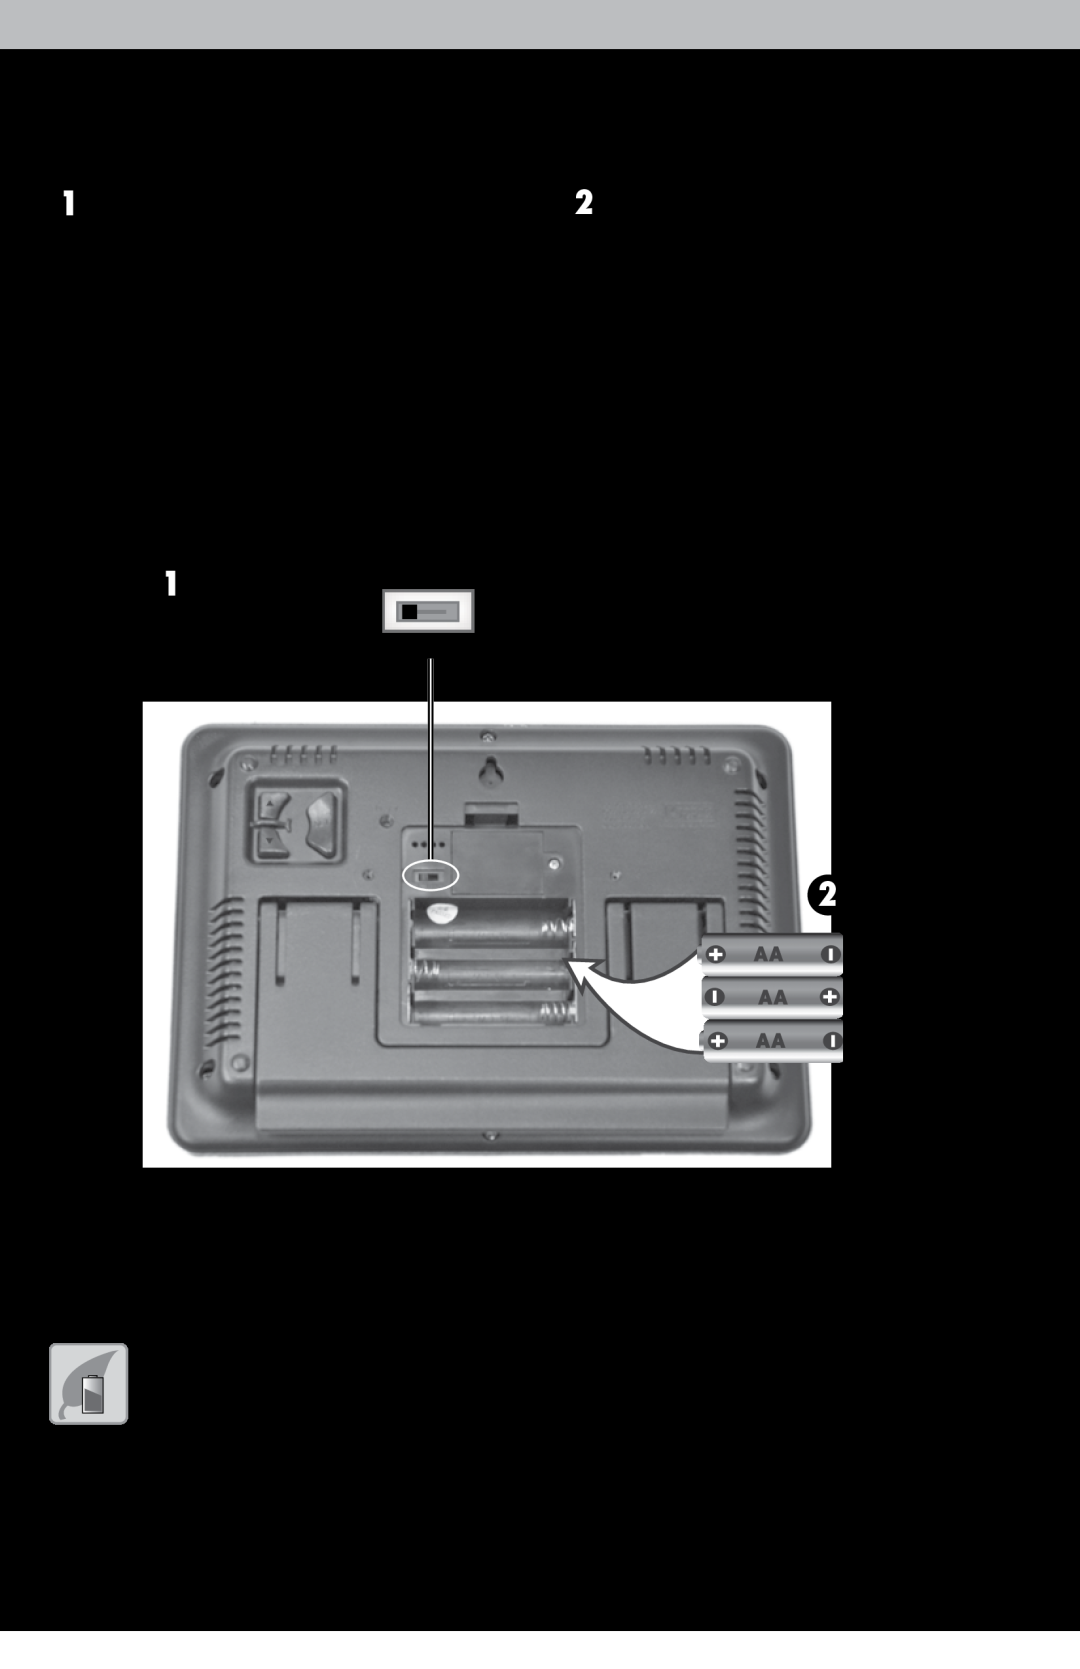 Acu-Rite 75075/75075W/75075W1 Display Unit Setup, Set the A-B-C Switch, A-B-C Switch A B C, set to match sensor 